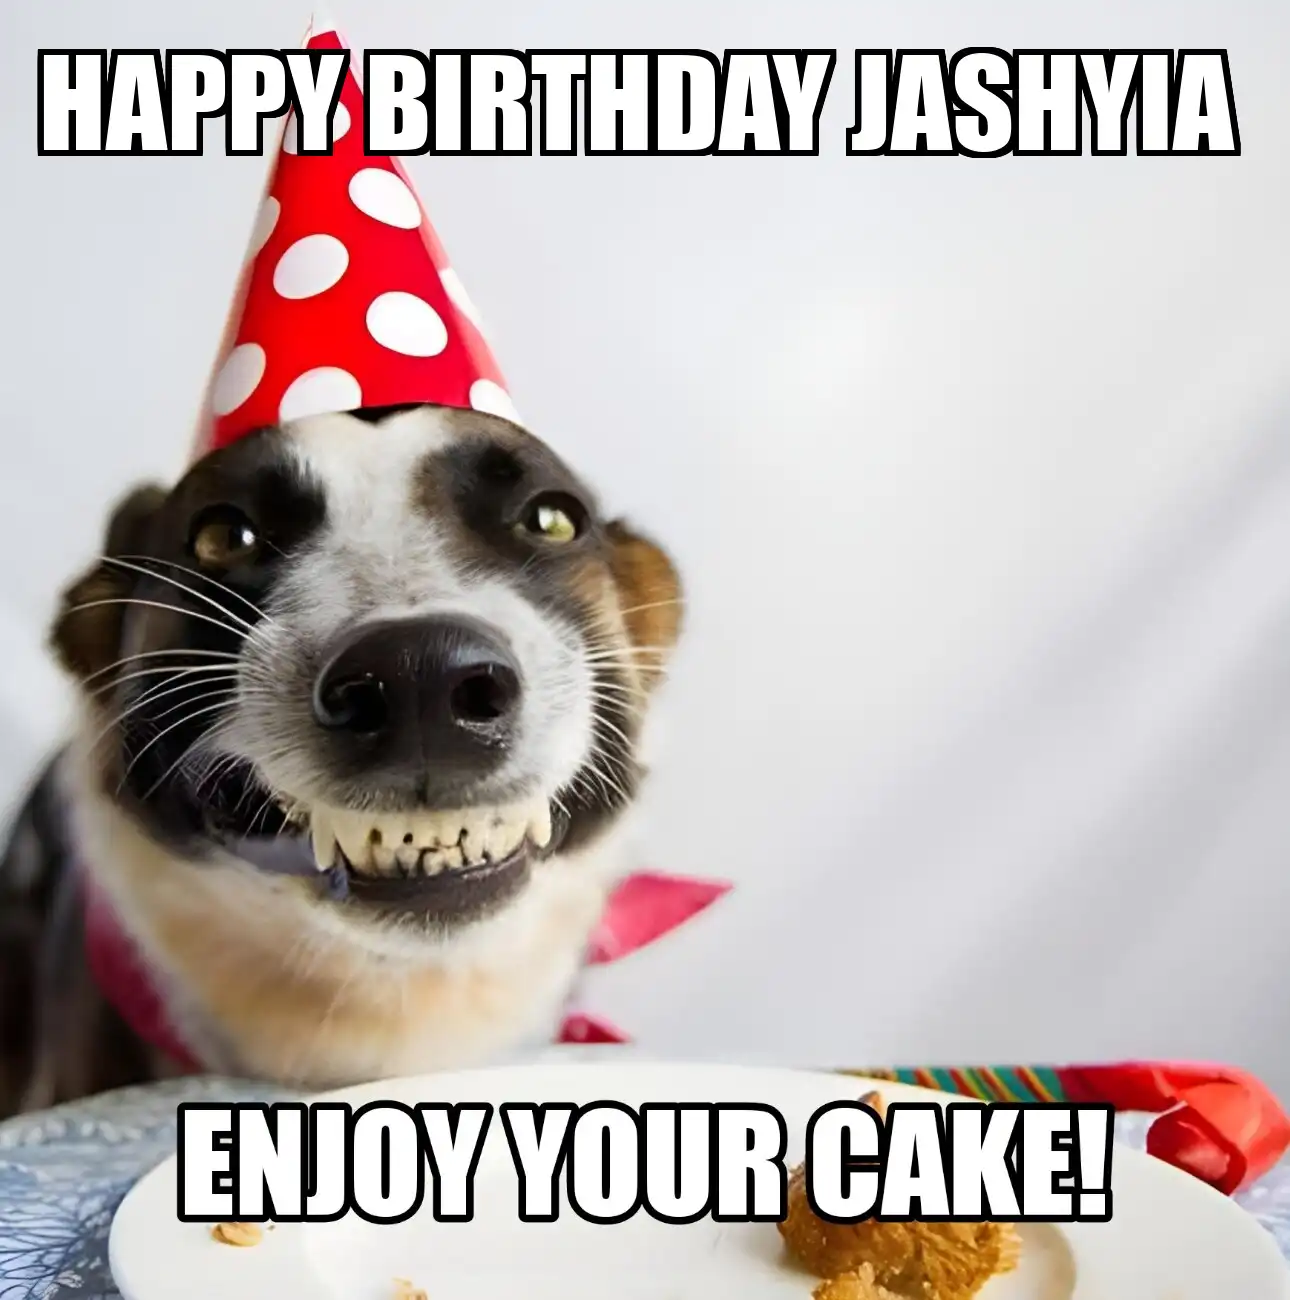 Happy Birthday Jashyia Enjoy Your Cake Dog Meme